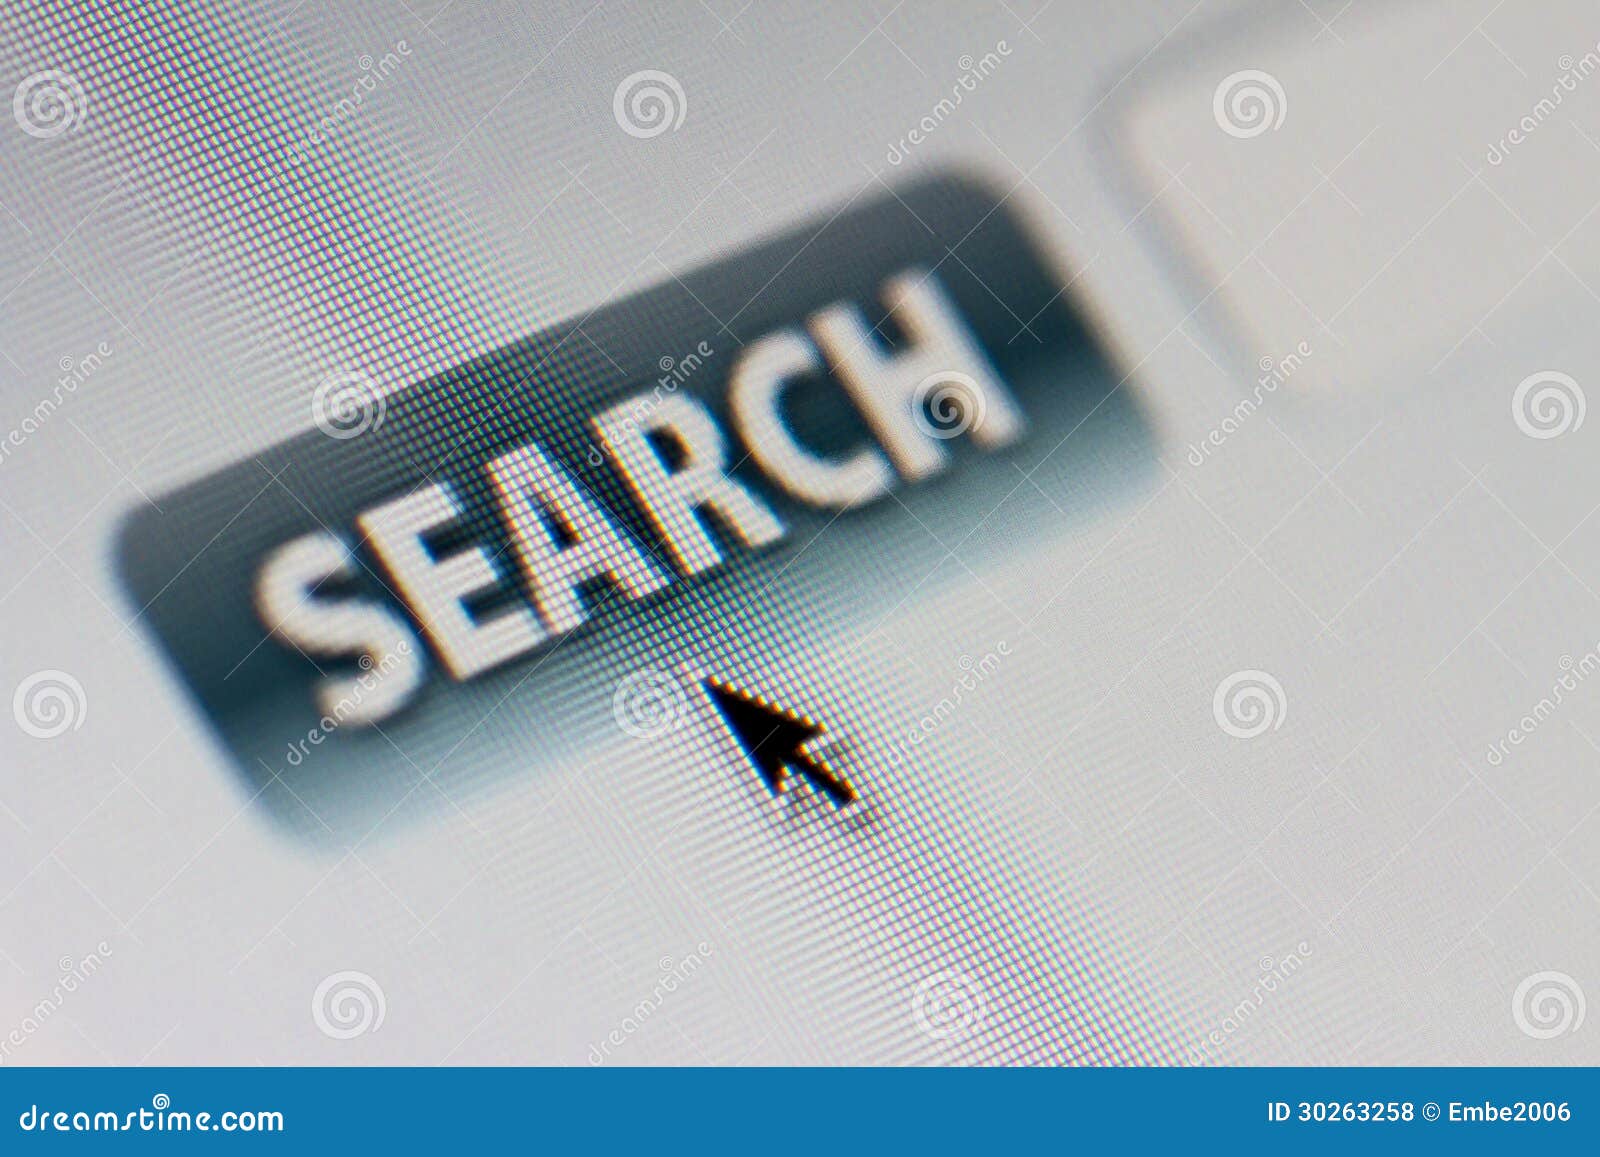 internet search